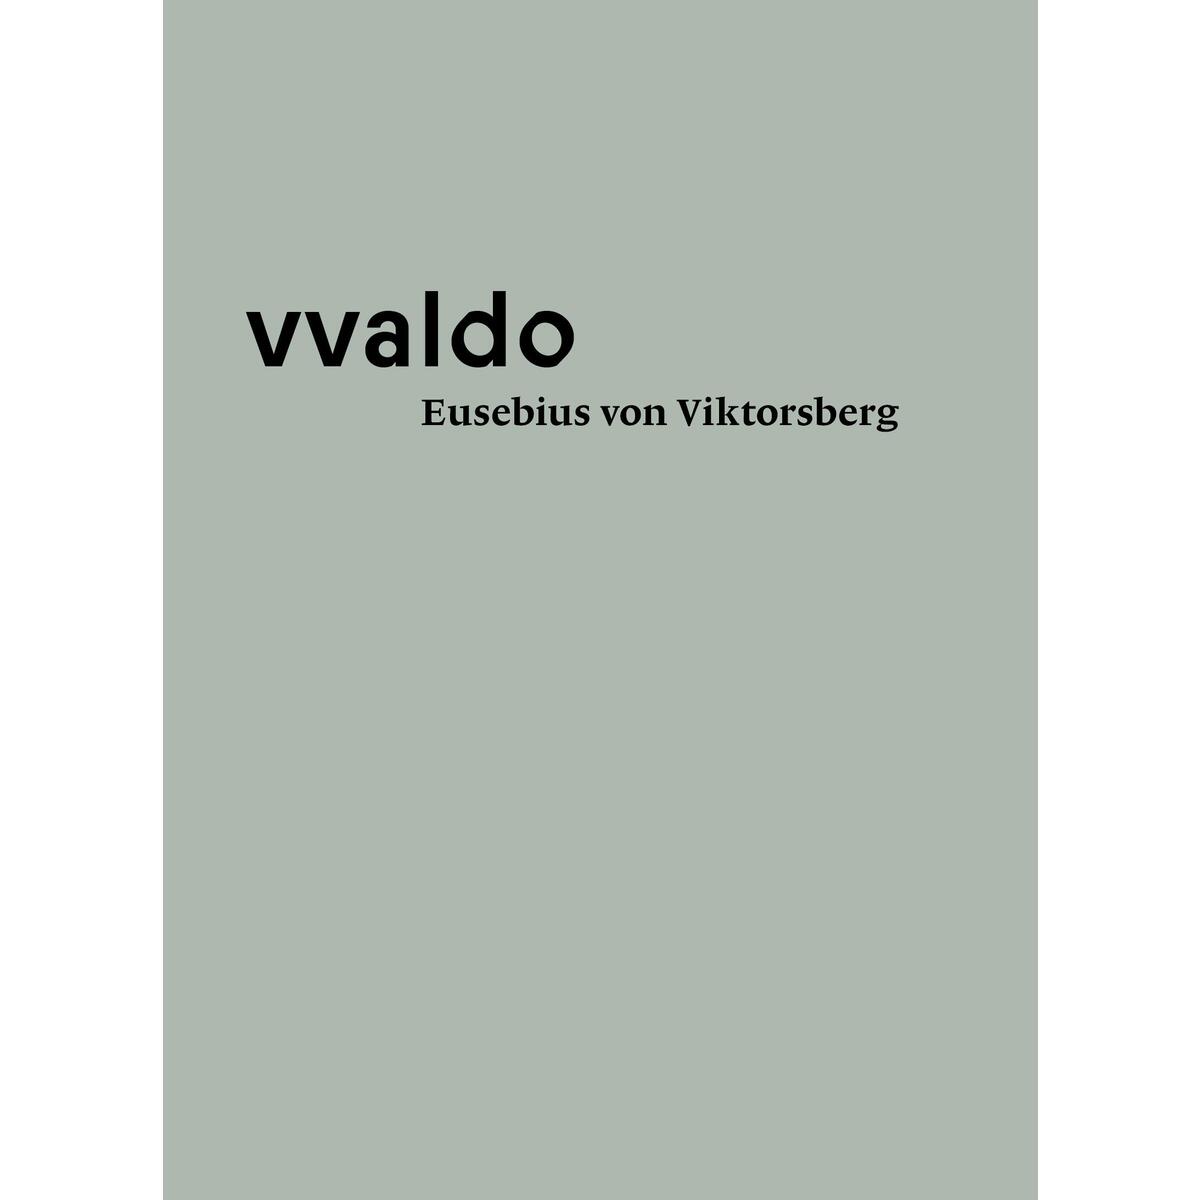 Eusebius von Viktsberg (vvaldo - vademecum II) von Fink Kunstverlag Josef